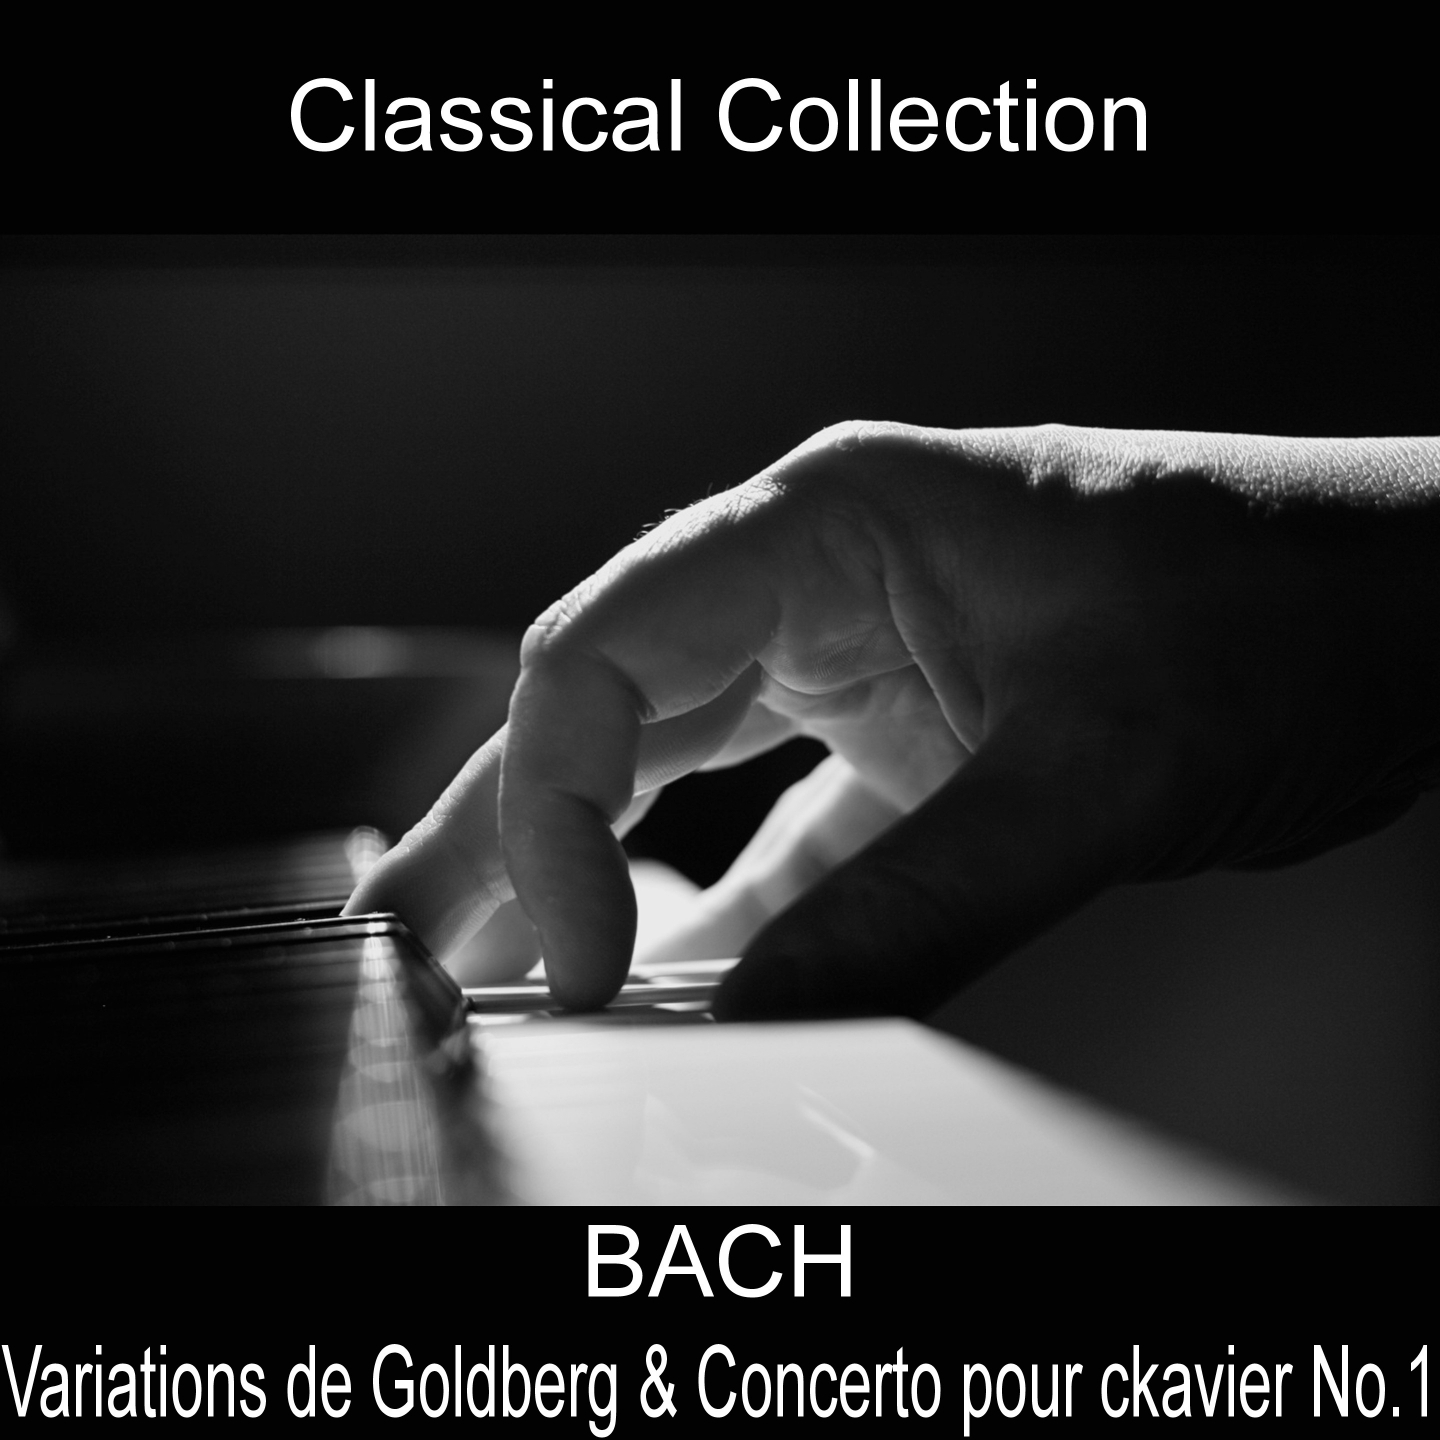 Variations Goldberg, BWV 988: No. 23, Variation XXII Alla breve a un clavier